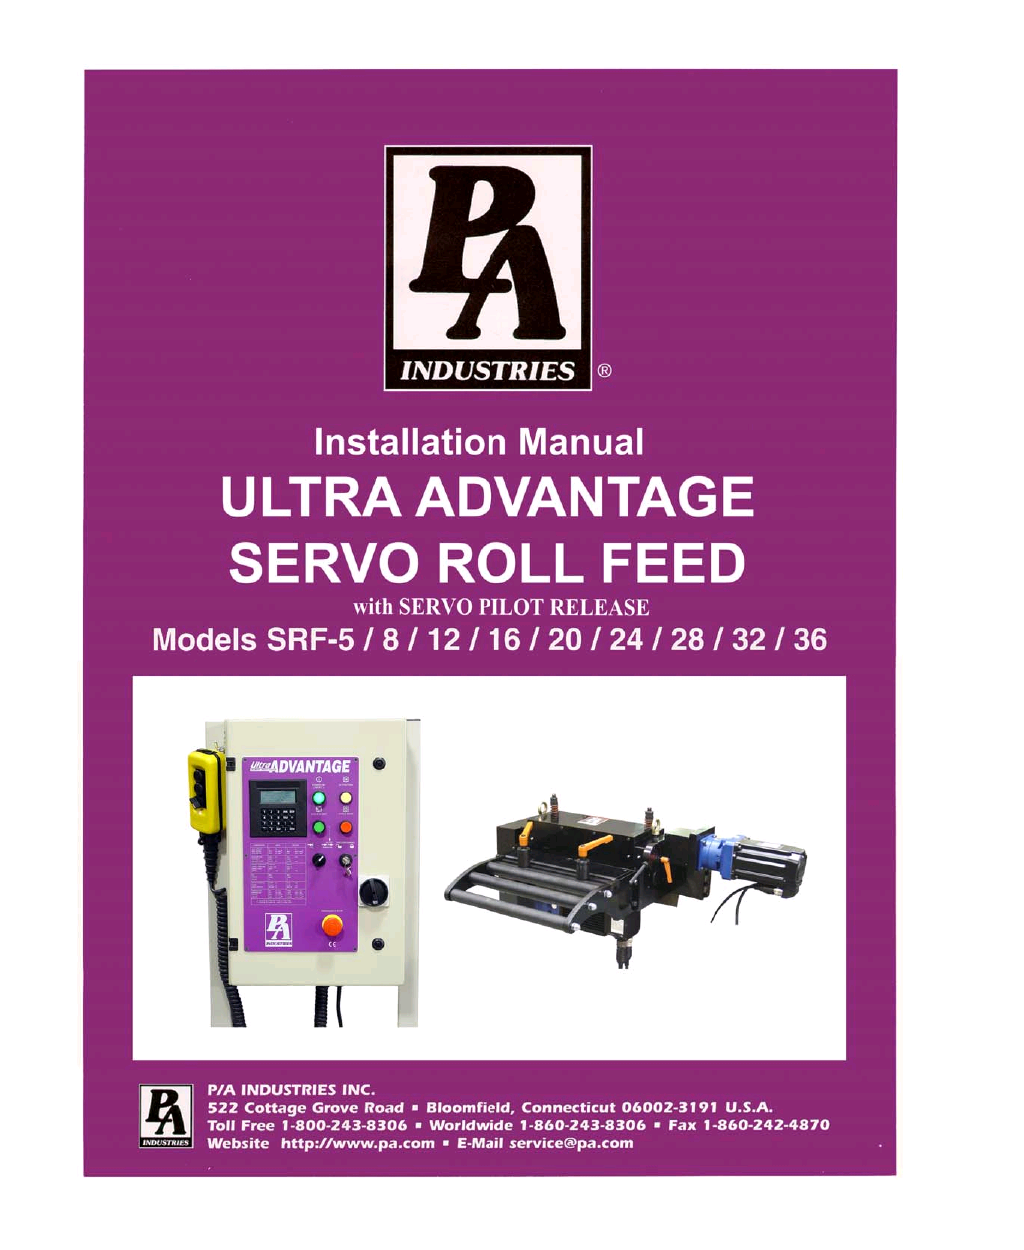 Advantage Servo Roll Feed SRF-5/8/12/16/20/24/28/32/36 with Servo Pilot Release - Installation Manual